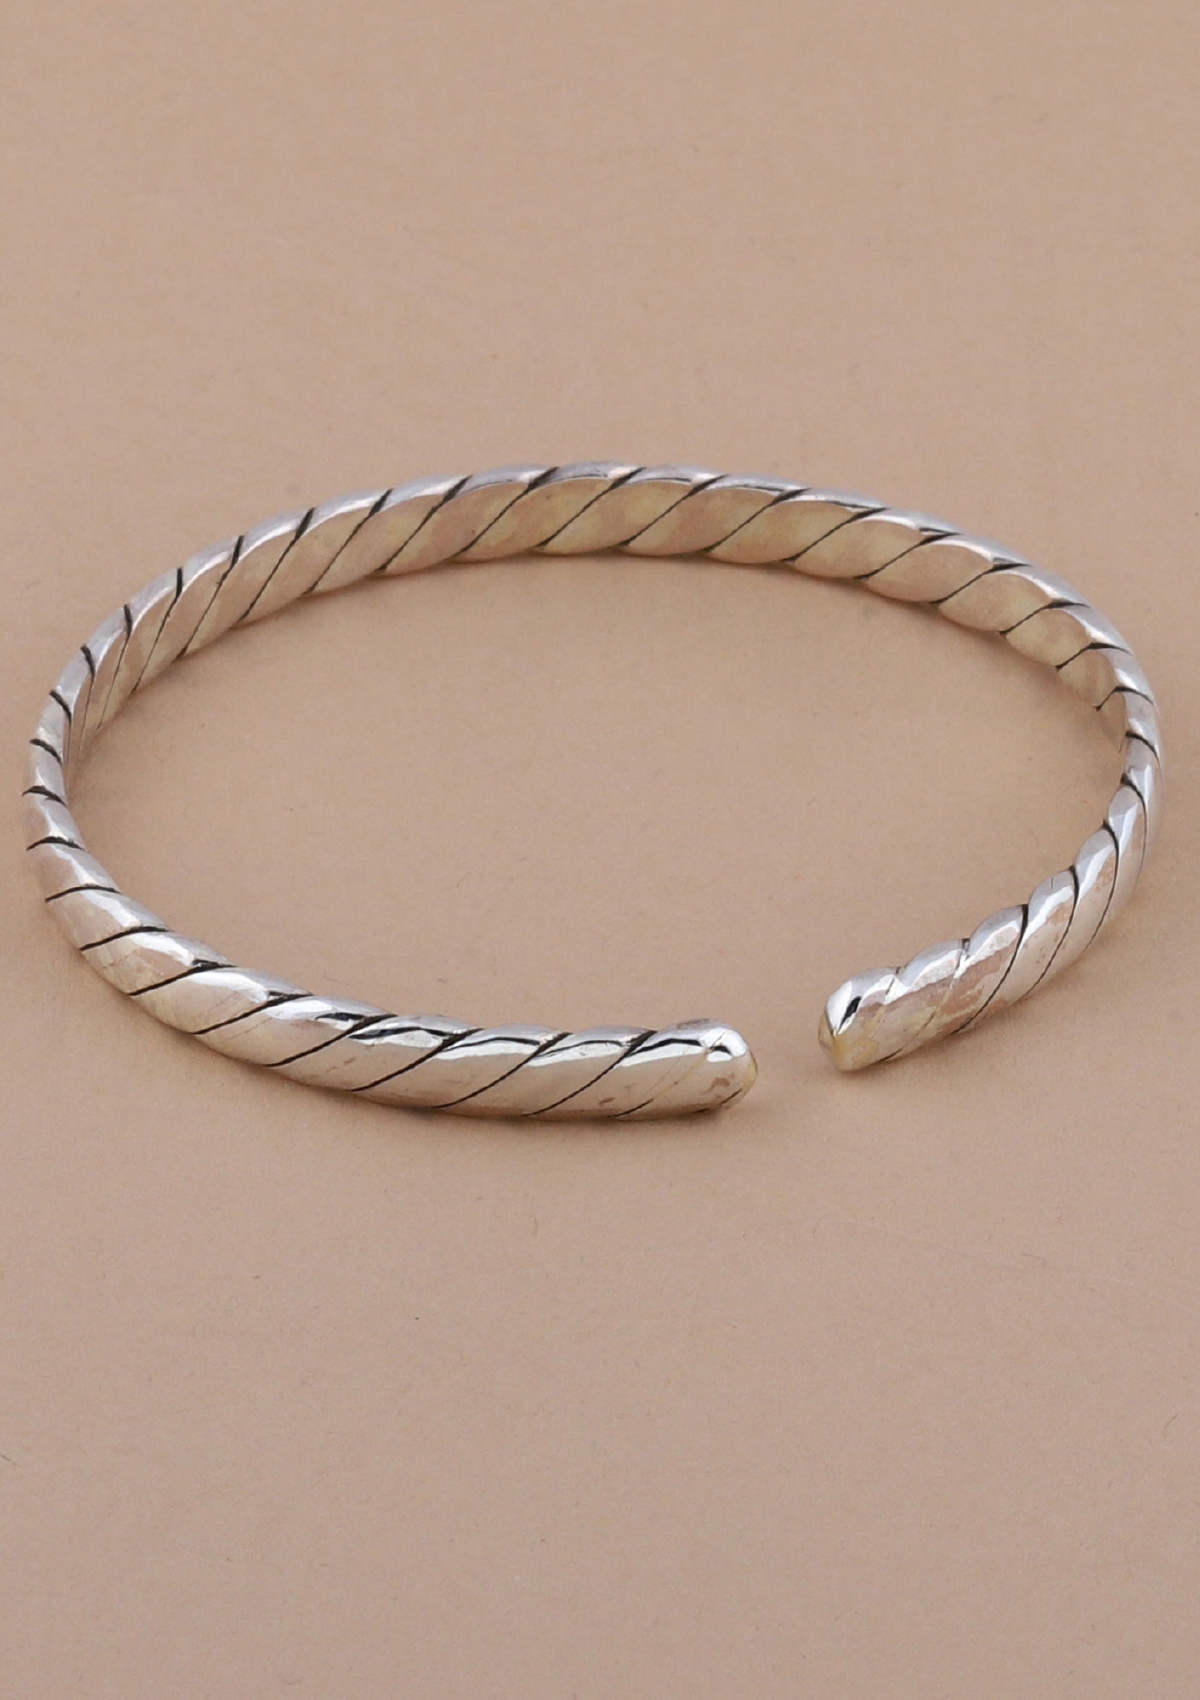 Solid Ridged Silver Bracelet - IshqMe